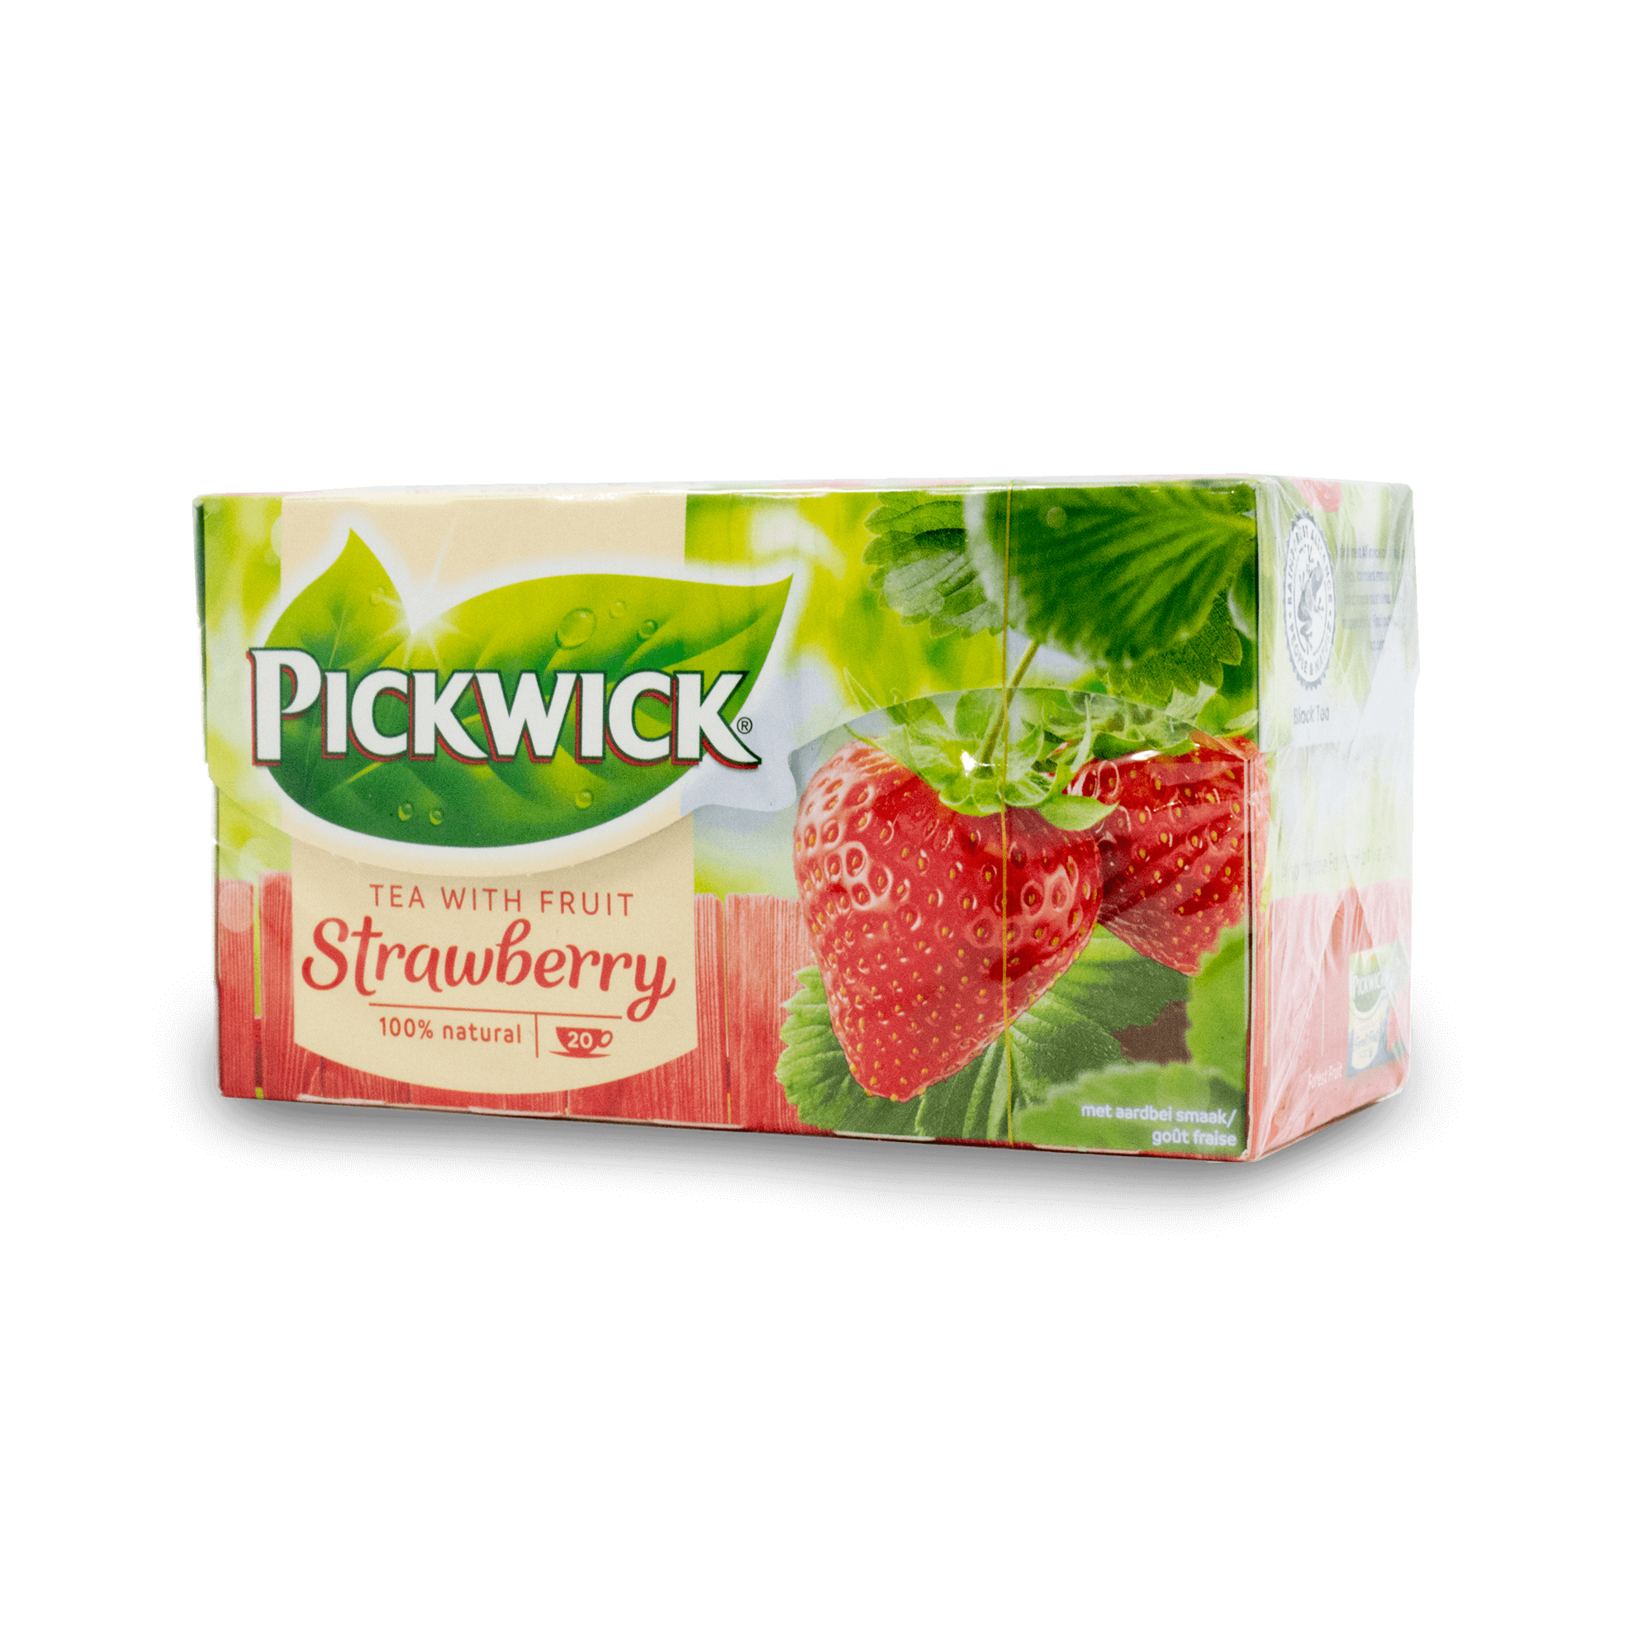 Pickwick Pickwick Strawberry Tea 30g